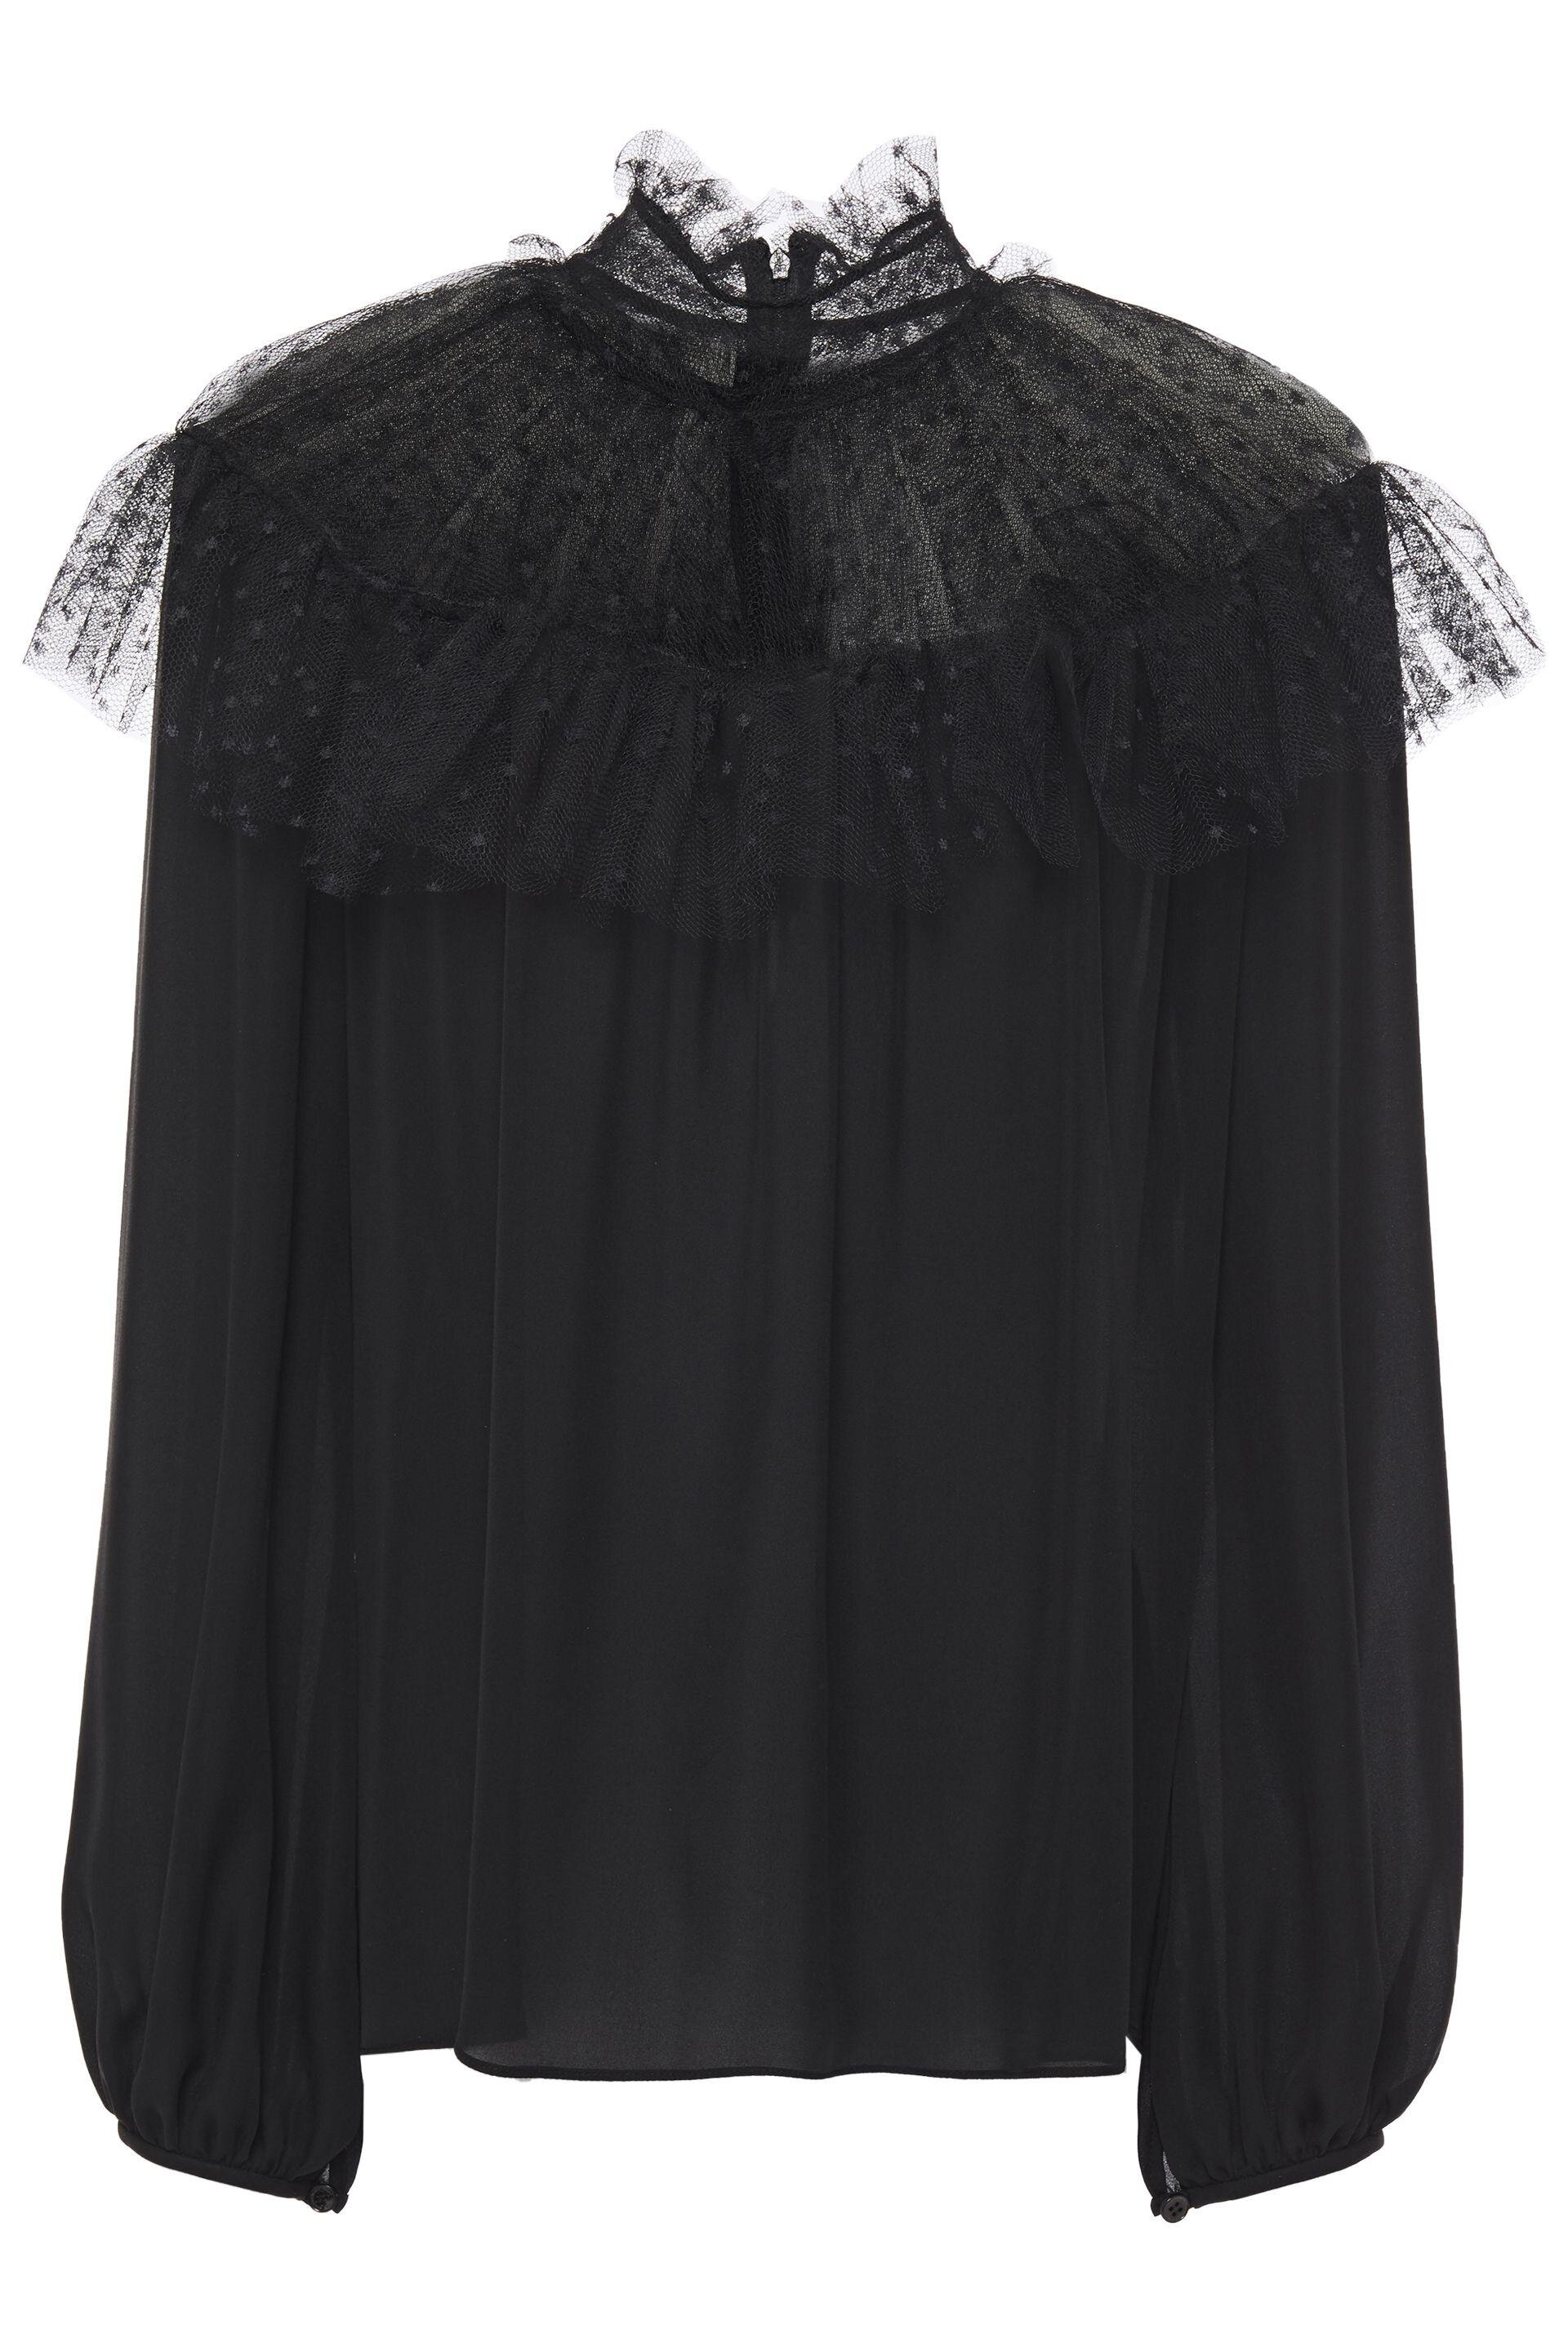 Giambattista Valli Point D'esprit-Paneled Silk Blouse in Black.jpg